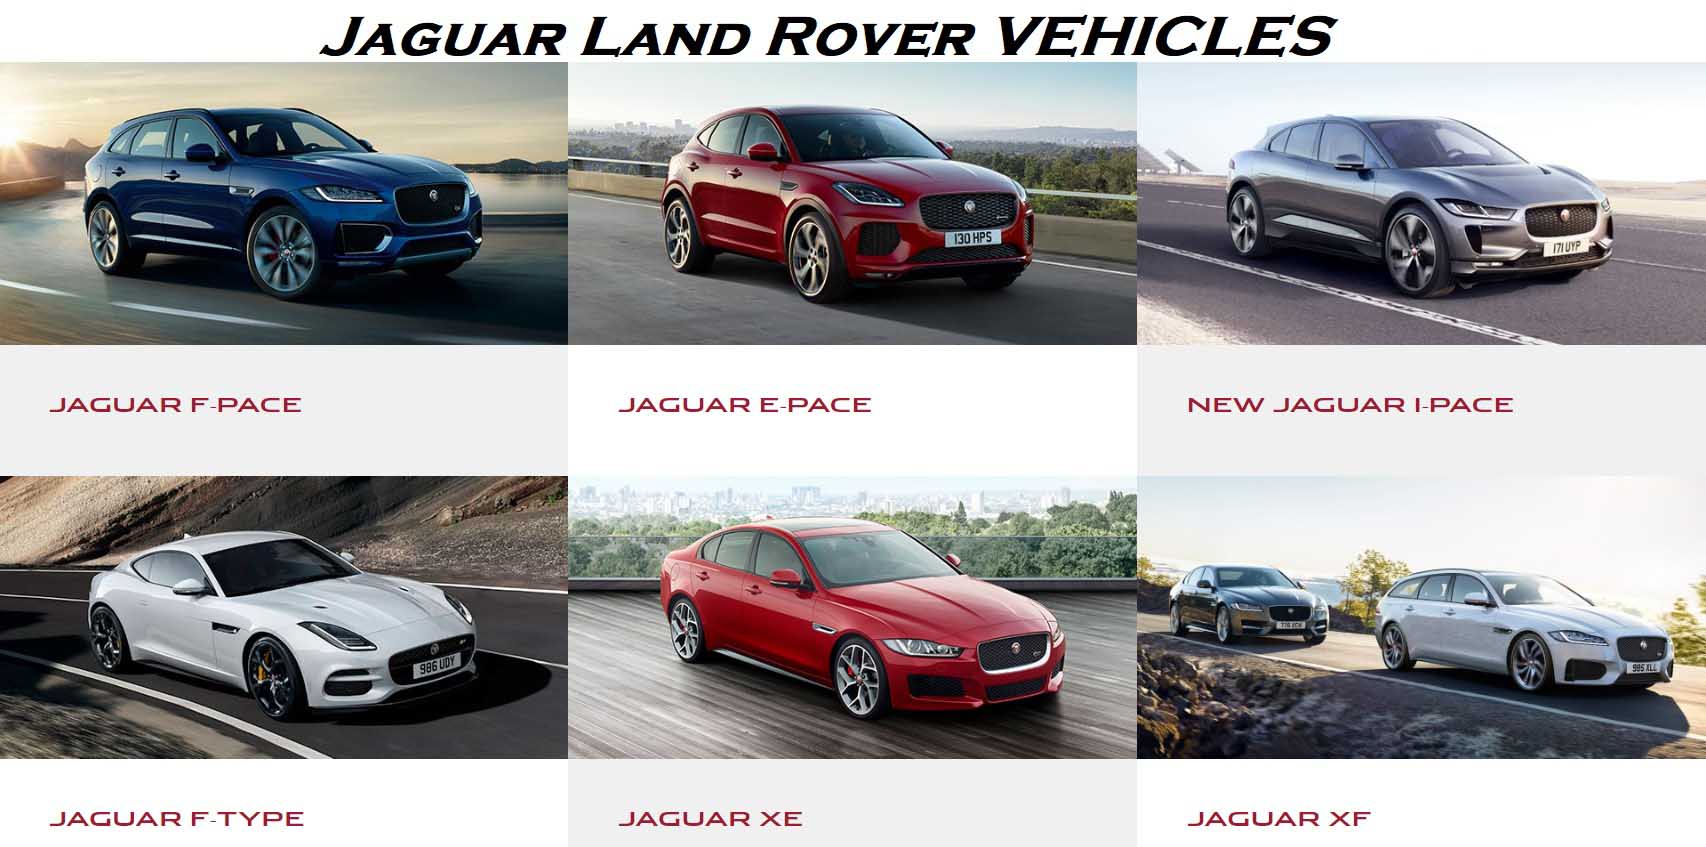 Jaguar Land Rover VEHICLES All Images - Photos